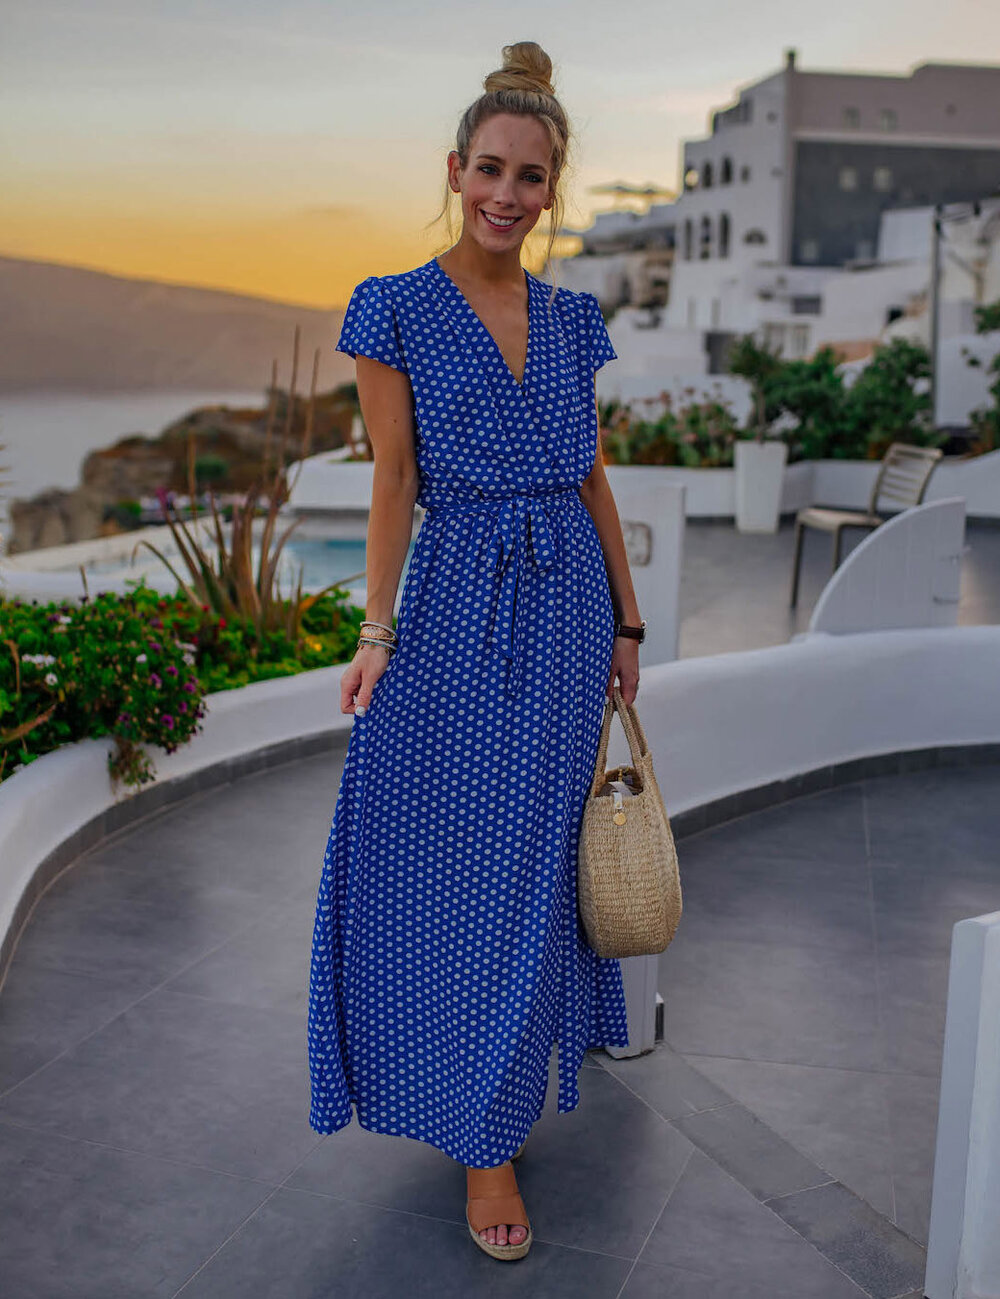 what-to-wear-in-greece-pack-travel-suitcase-dress-hat-trip-vacation-style-wardrobe-greek-59762213619.jpg